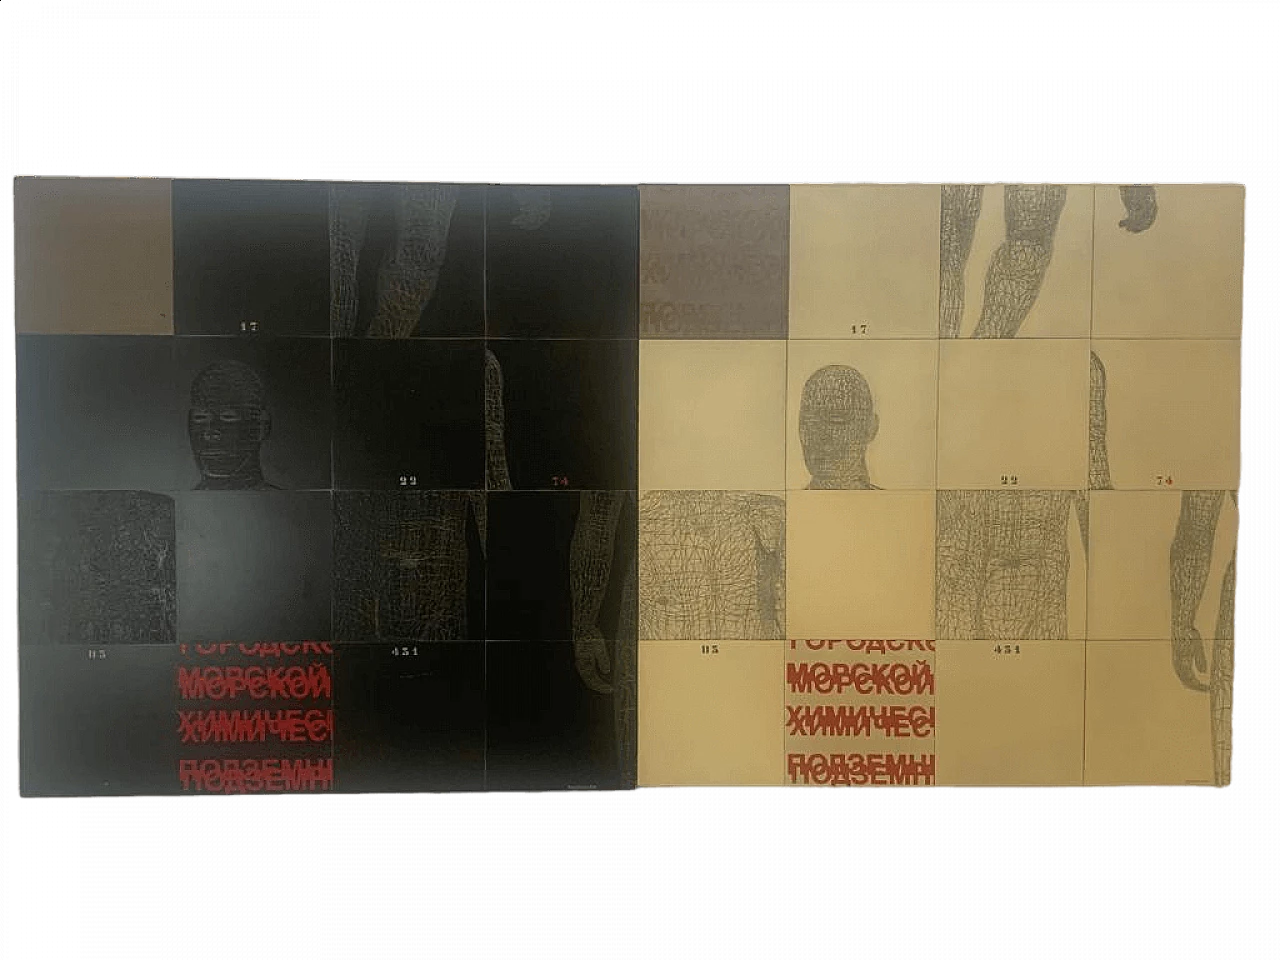 Stefano Bersani, Anatomical Scan Composition, mixed media, 2014 8